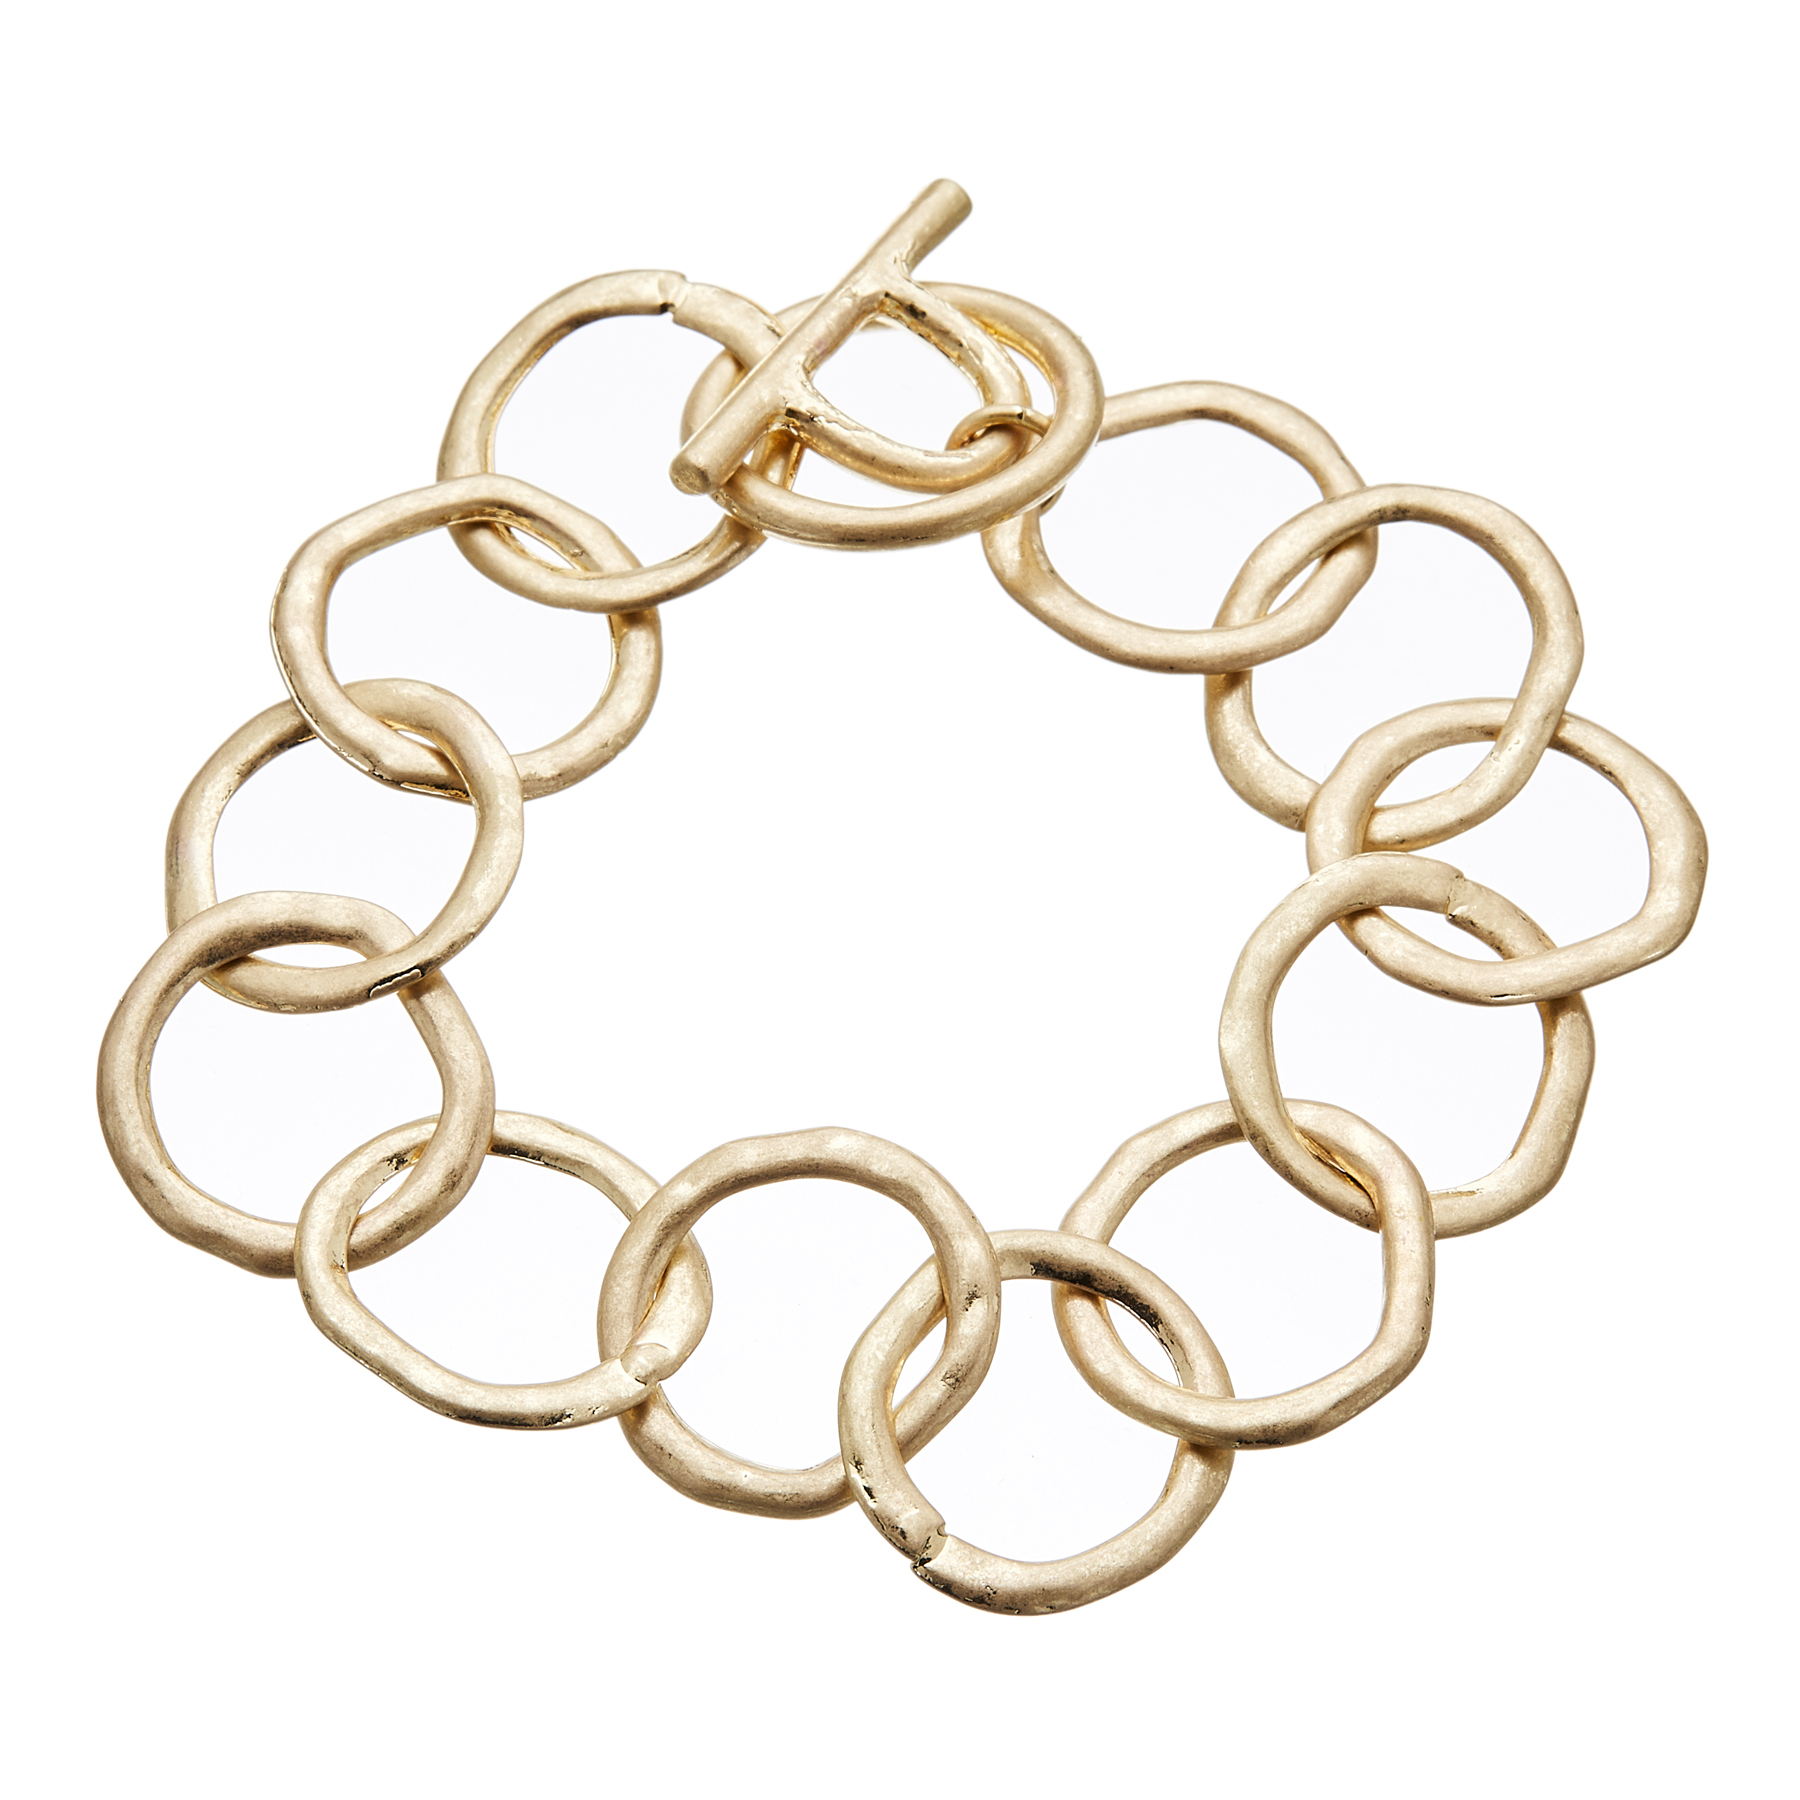 Matt gold T bar Bracelet with linked connecting circles - Jalen G